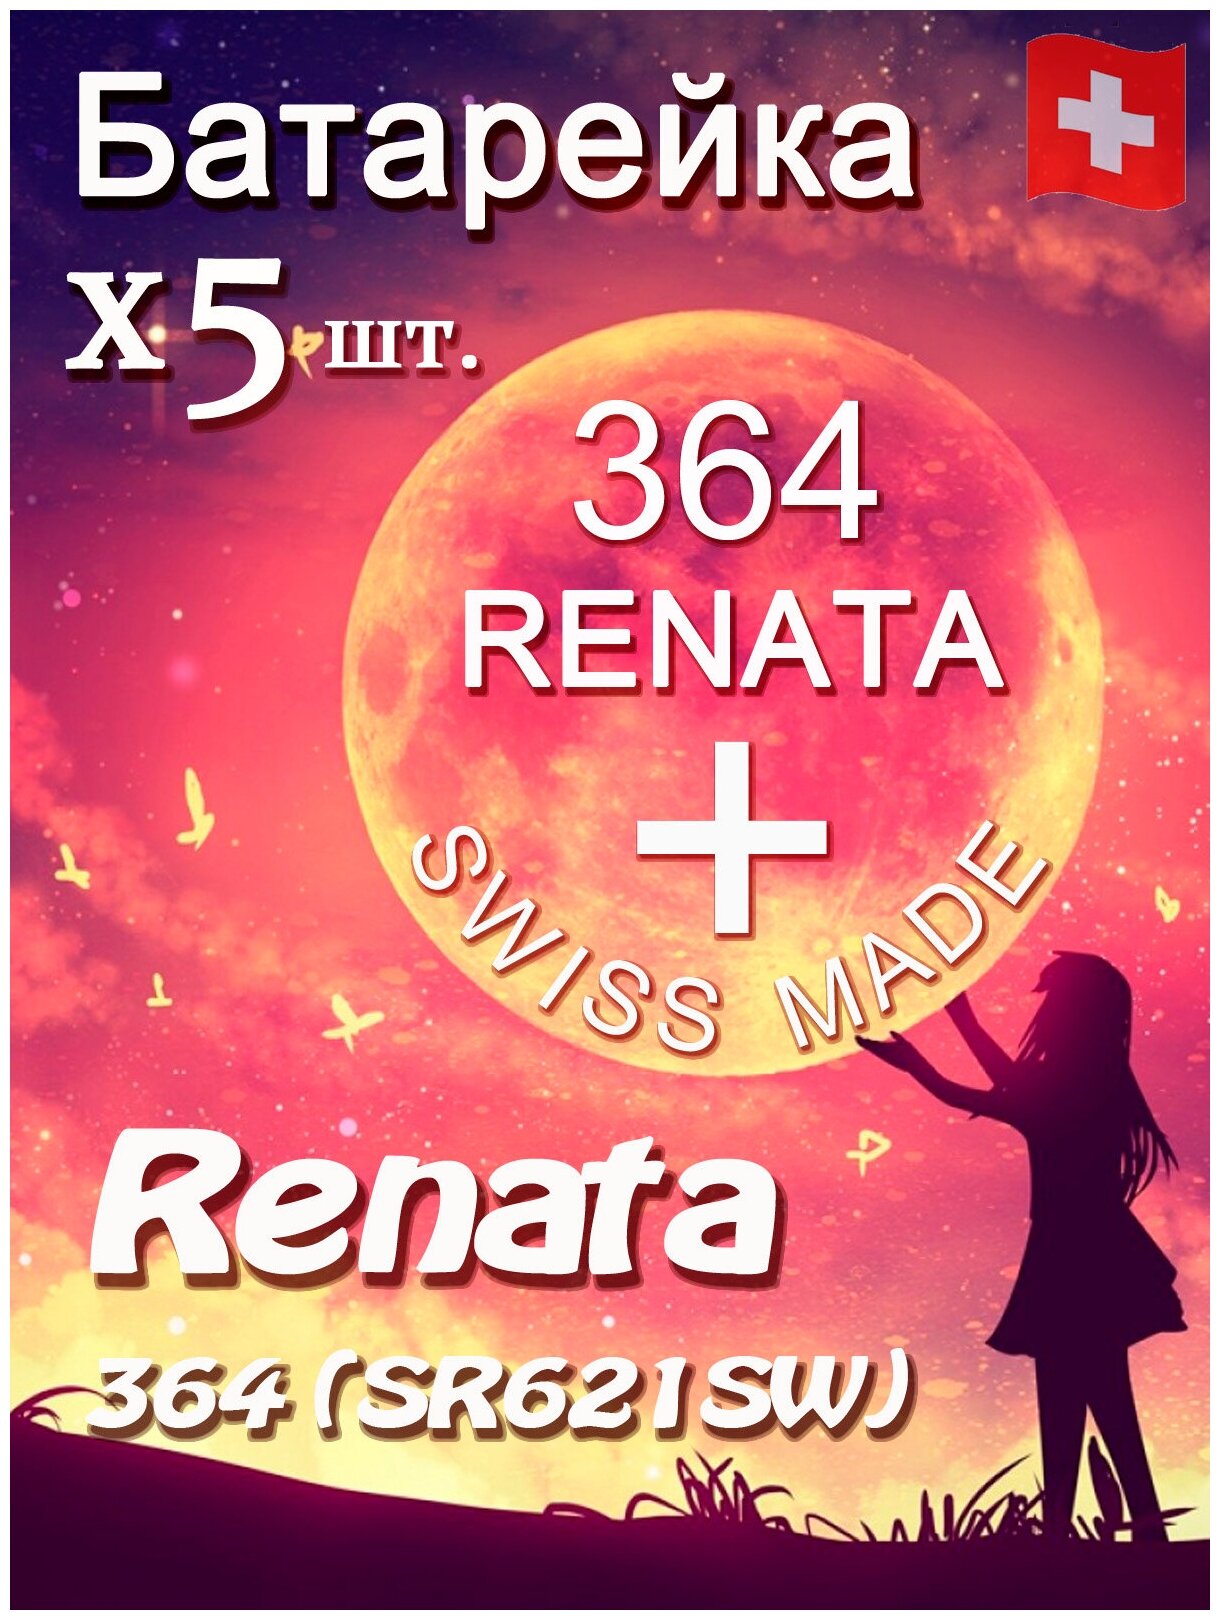 Батарейка Renata 364 5шт/Элемент питания рената 364 В10 (SR621SW)(без ртути) 5шт